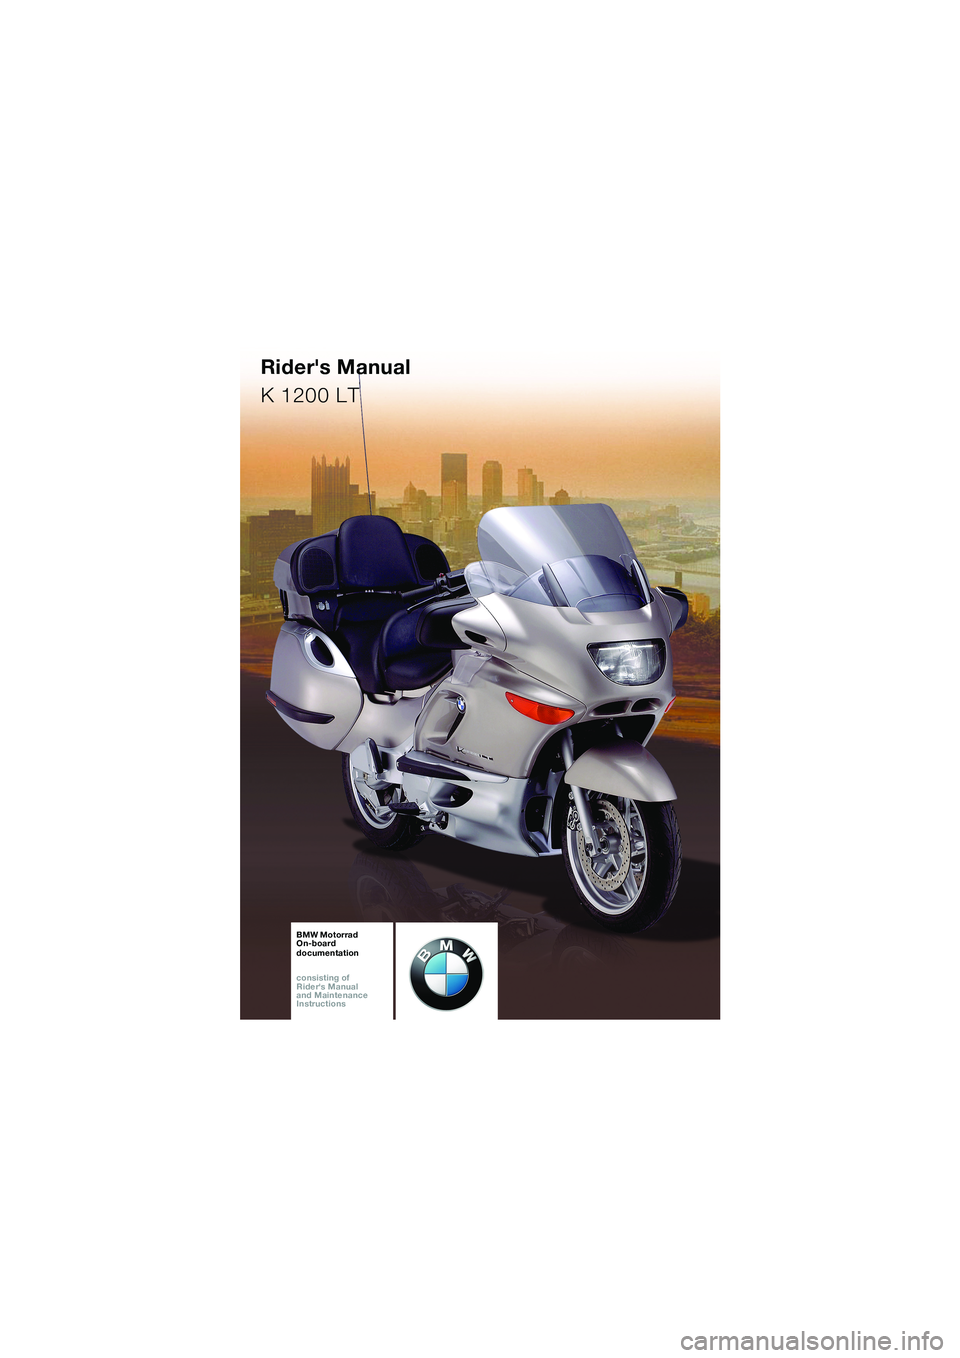 BMW MOTORRAD K 1200 LT 2002  Riders Manual (in English) 1
BA_Titel_Blank.fm  Seite 93  Dienstag, 6. August 2002  3:25 15 R
ider's Manual
K

 1200 LT
BMW Motorrad On-board
documentation
consisting of
Rider's Manual
and Maintenance
Instructions 